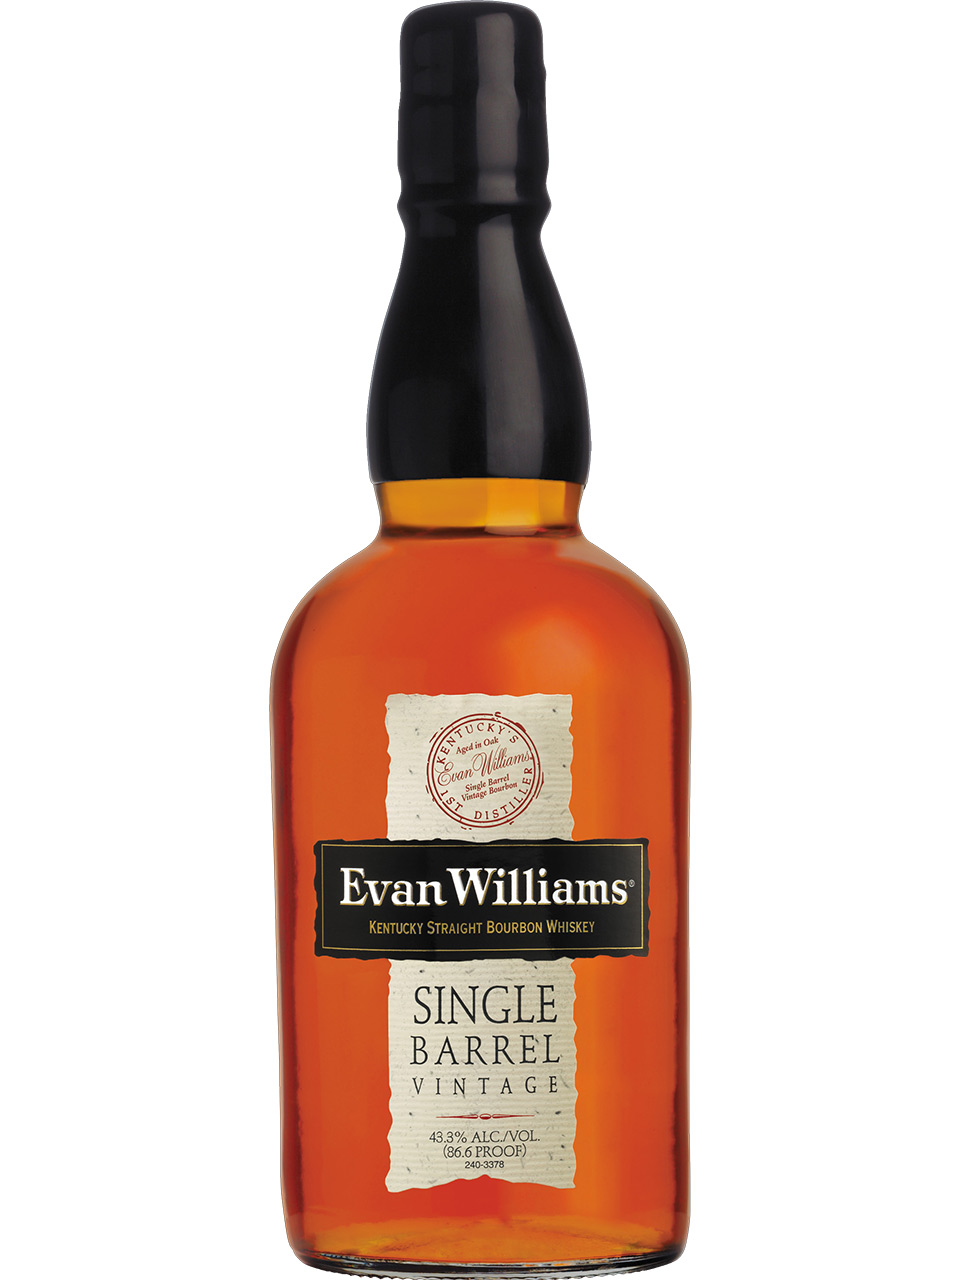 Evan Williams Single Barrel Bourbon Whiskey